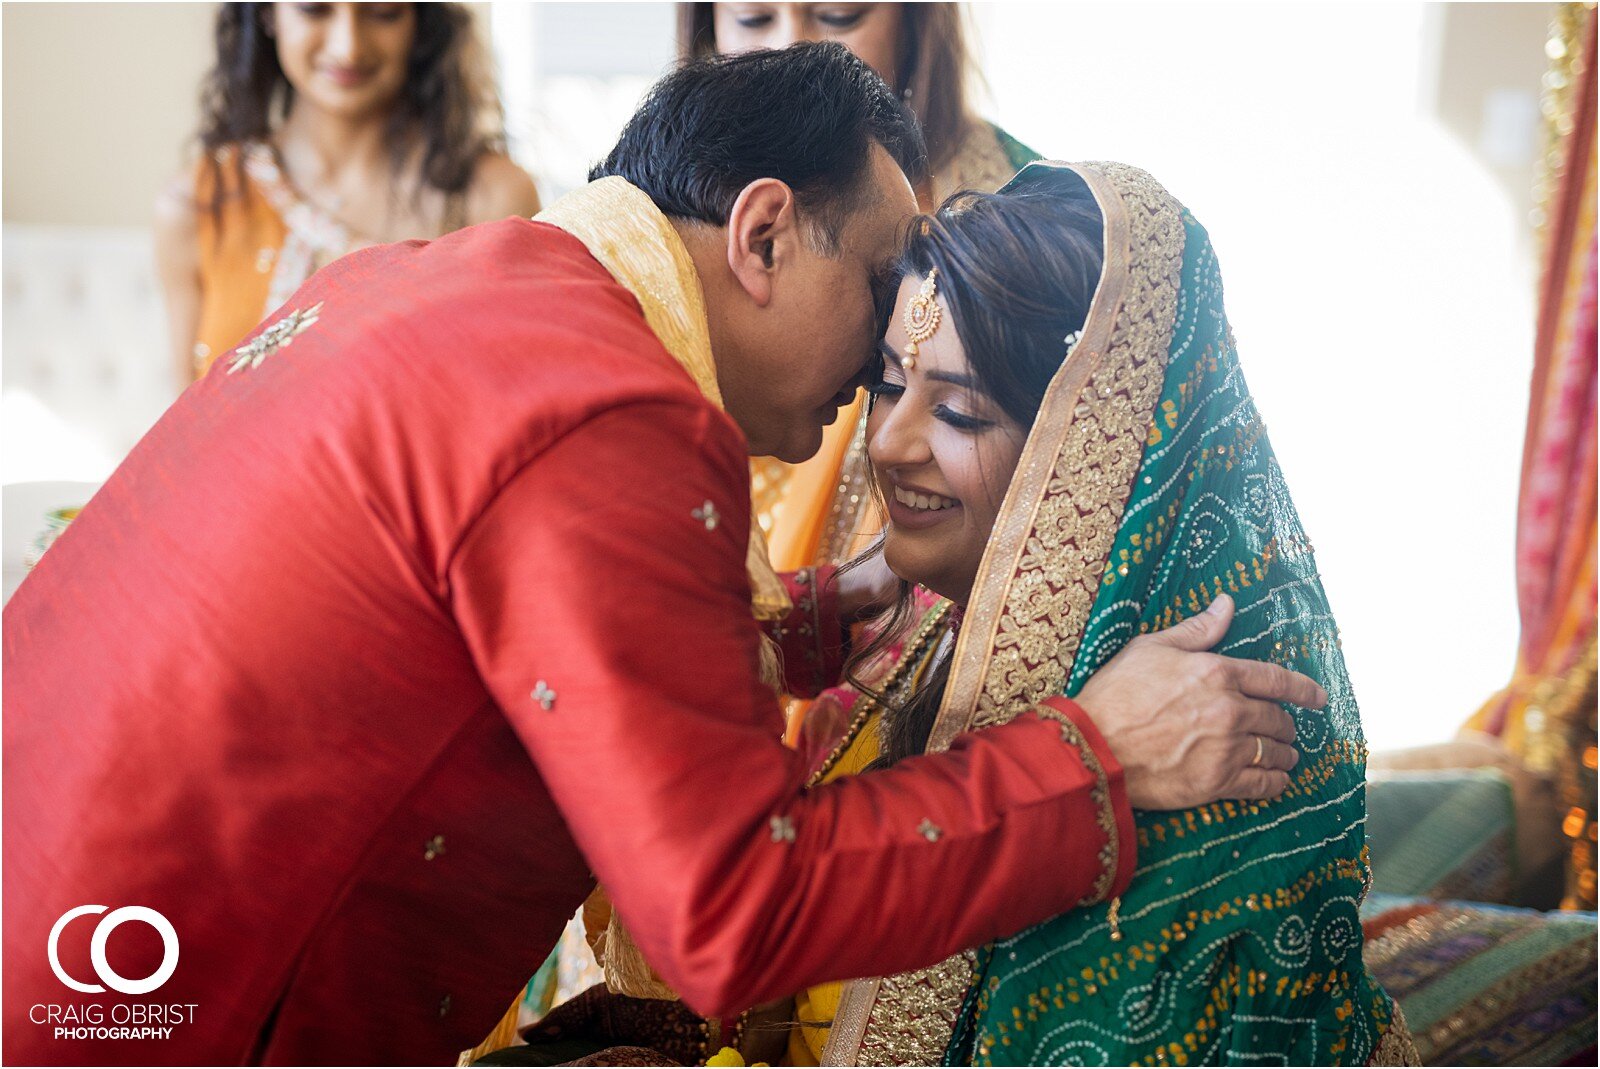 South Asian wedding cator woolford gardens_0002.jpg